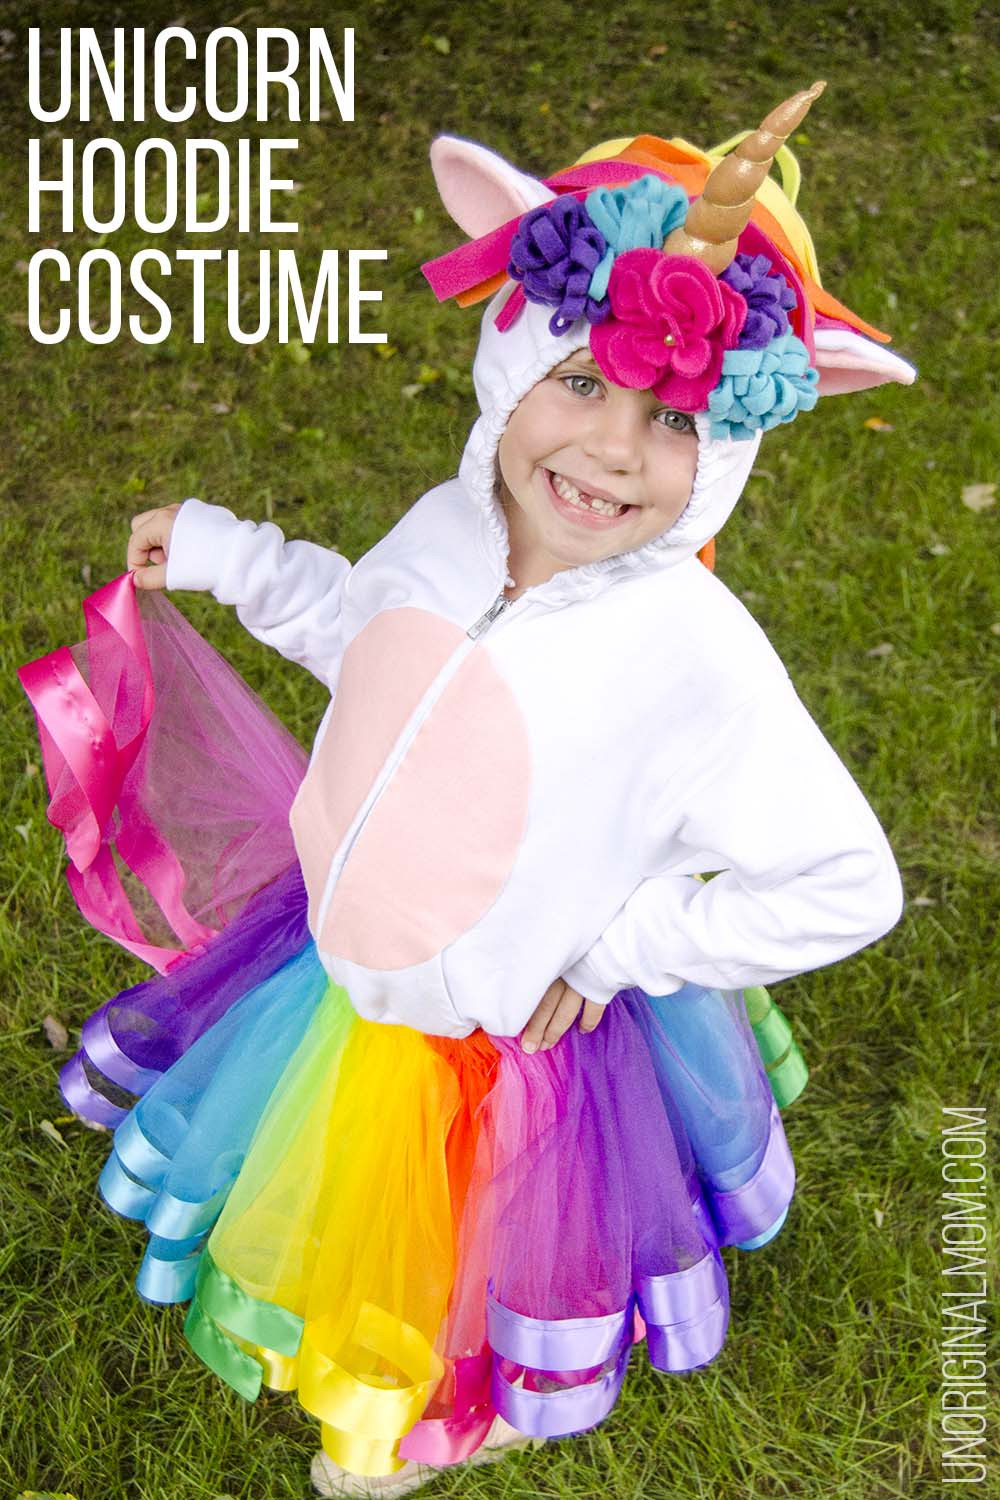 Best ideas about Unicorn Costume DIY
. Save or Pin DIY Unicorn Hoo Costume with Rainbow Tutu Tutorial Now.